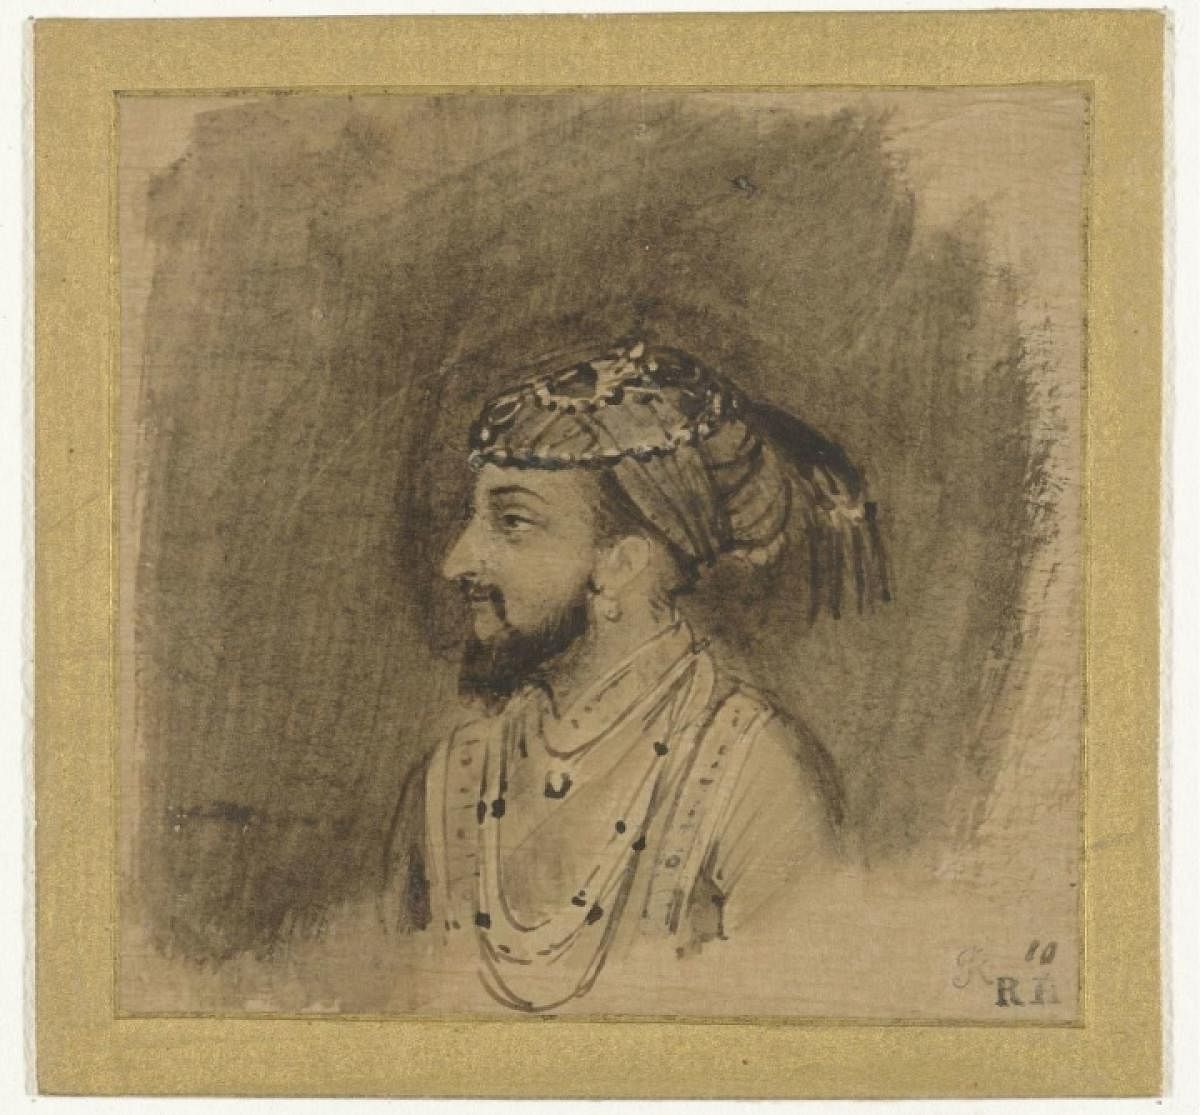 Portrait of Shah Jahan by Rembrandt  (Pic courtesy: RijksMuseum)